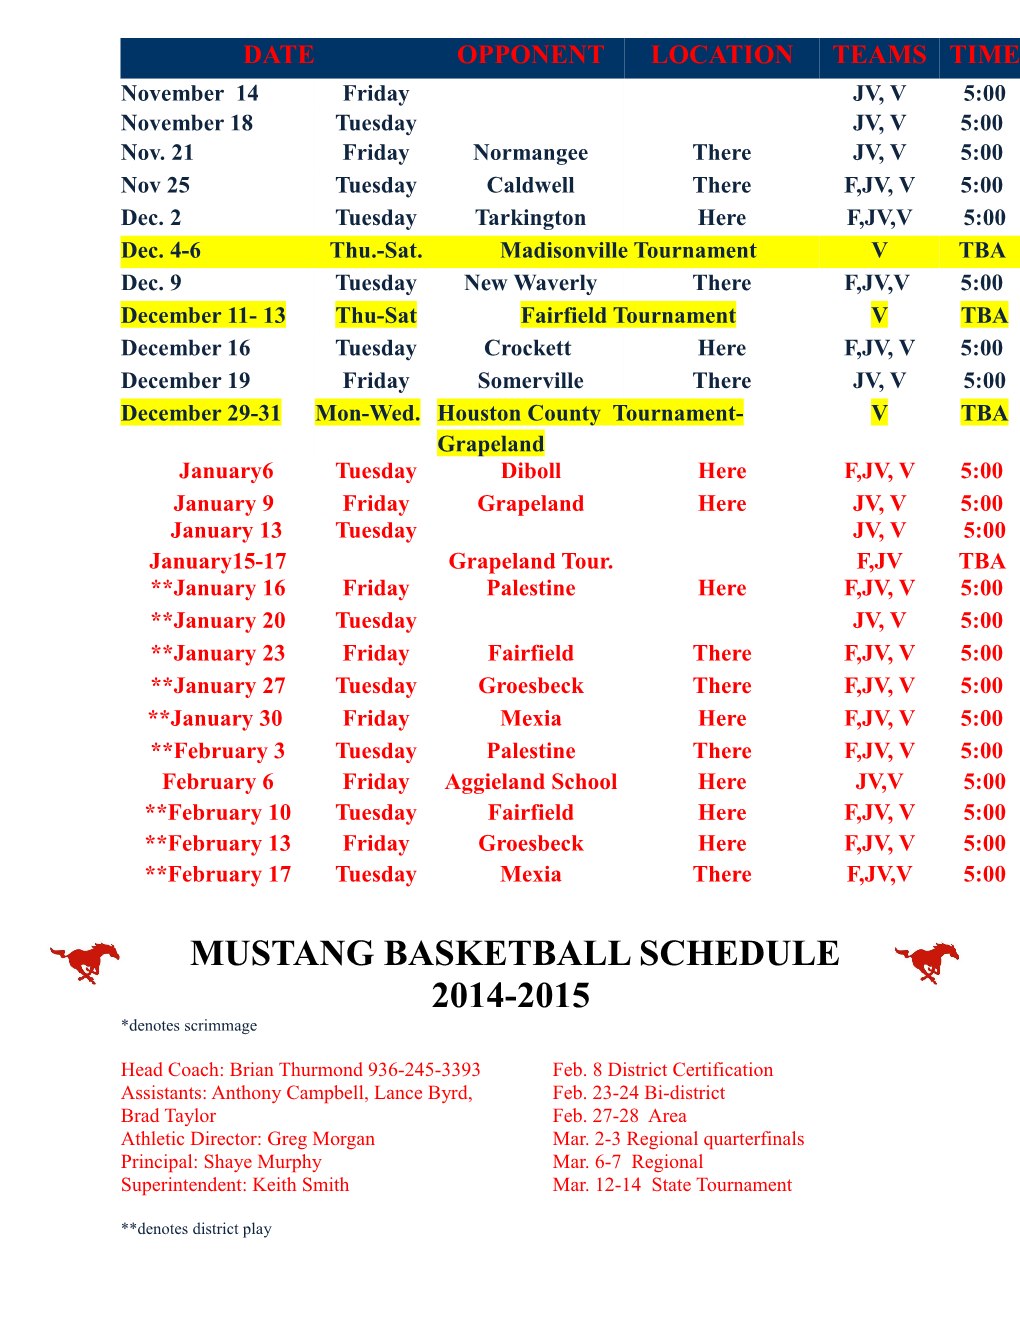 Mustang Basketball Schedule